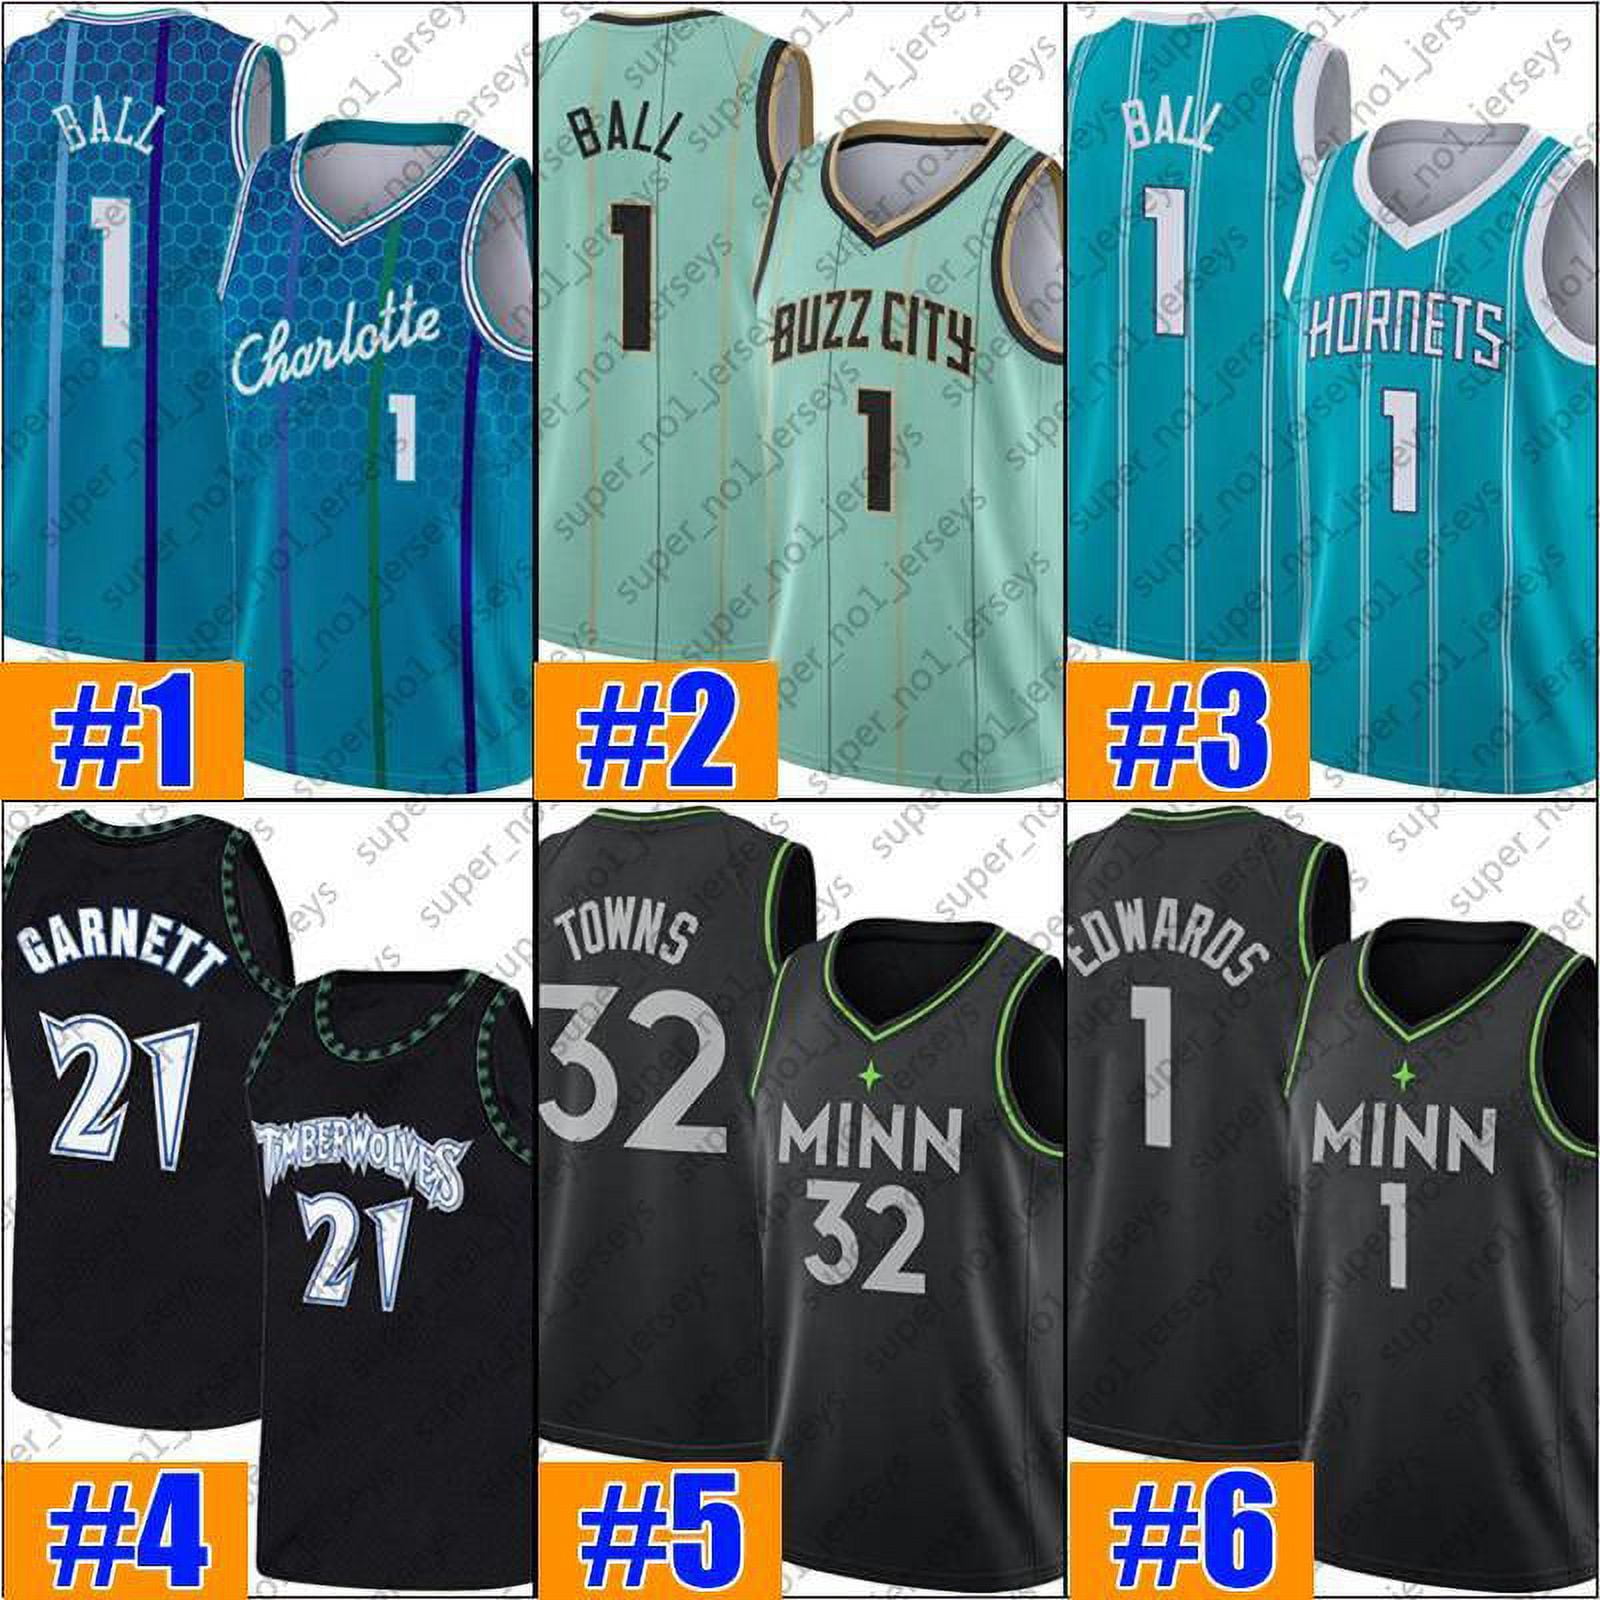 NBA_ Charlottes Hornet Atlantas Hawk 1 20 11 5 4 Basketball Jersey